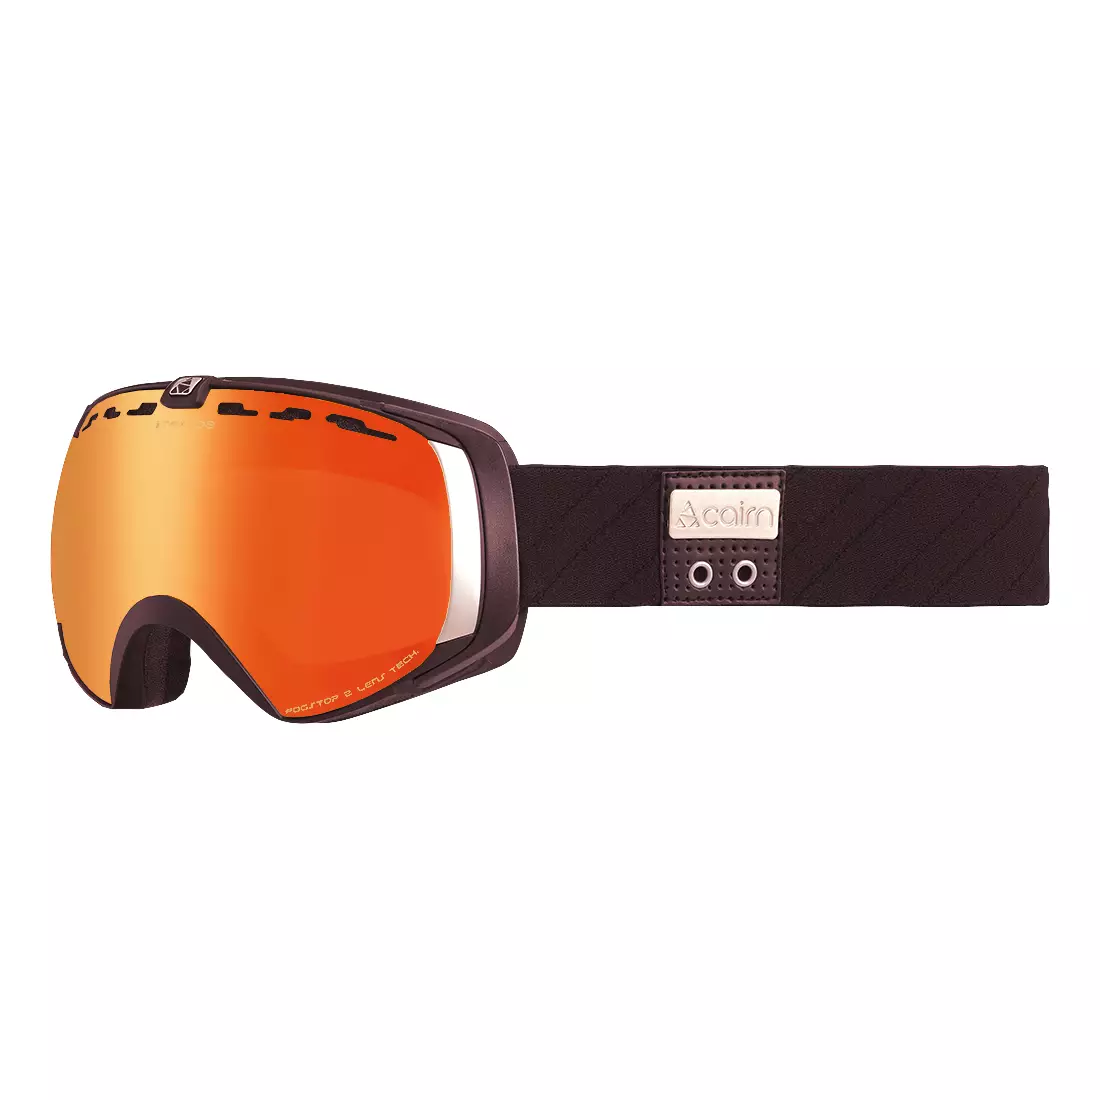 CAIRN STRATOS SPX3000 IUM cyklistické okuliare, oranžová